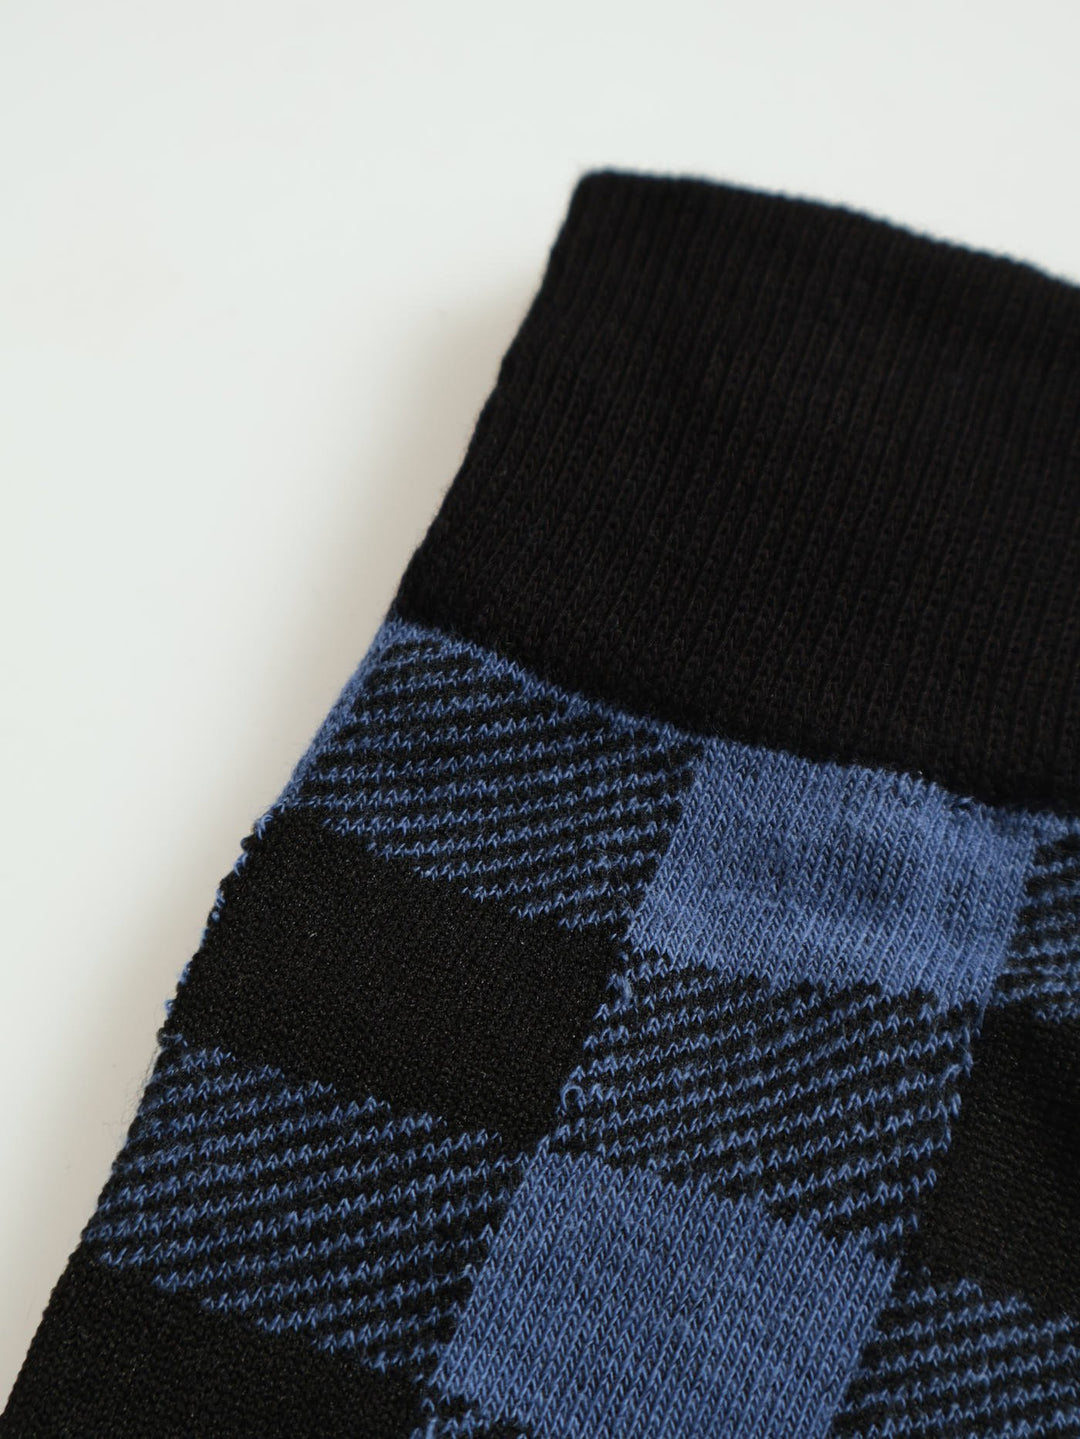 1 Pack Single Check Anklet Mid Socks - Blue/Black